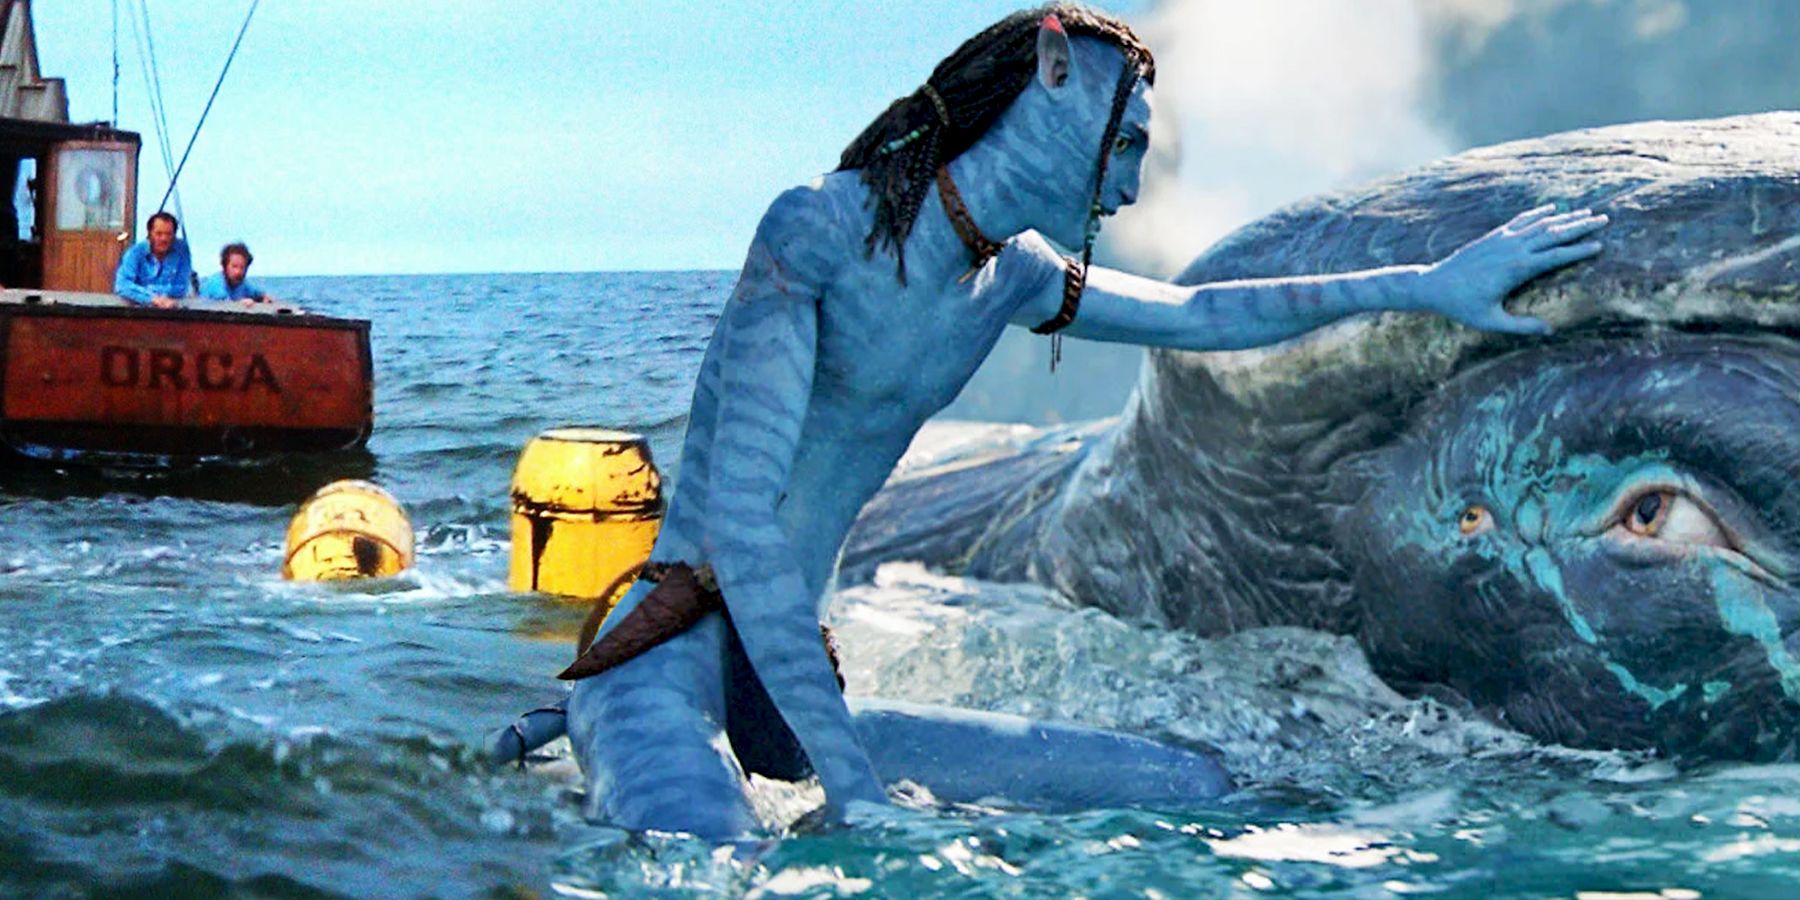 Akula Shark  Avatar The Way of Water 2022  YouTube